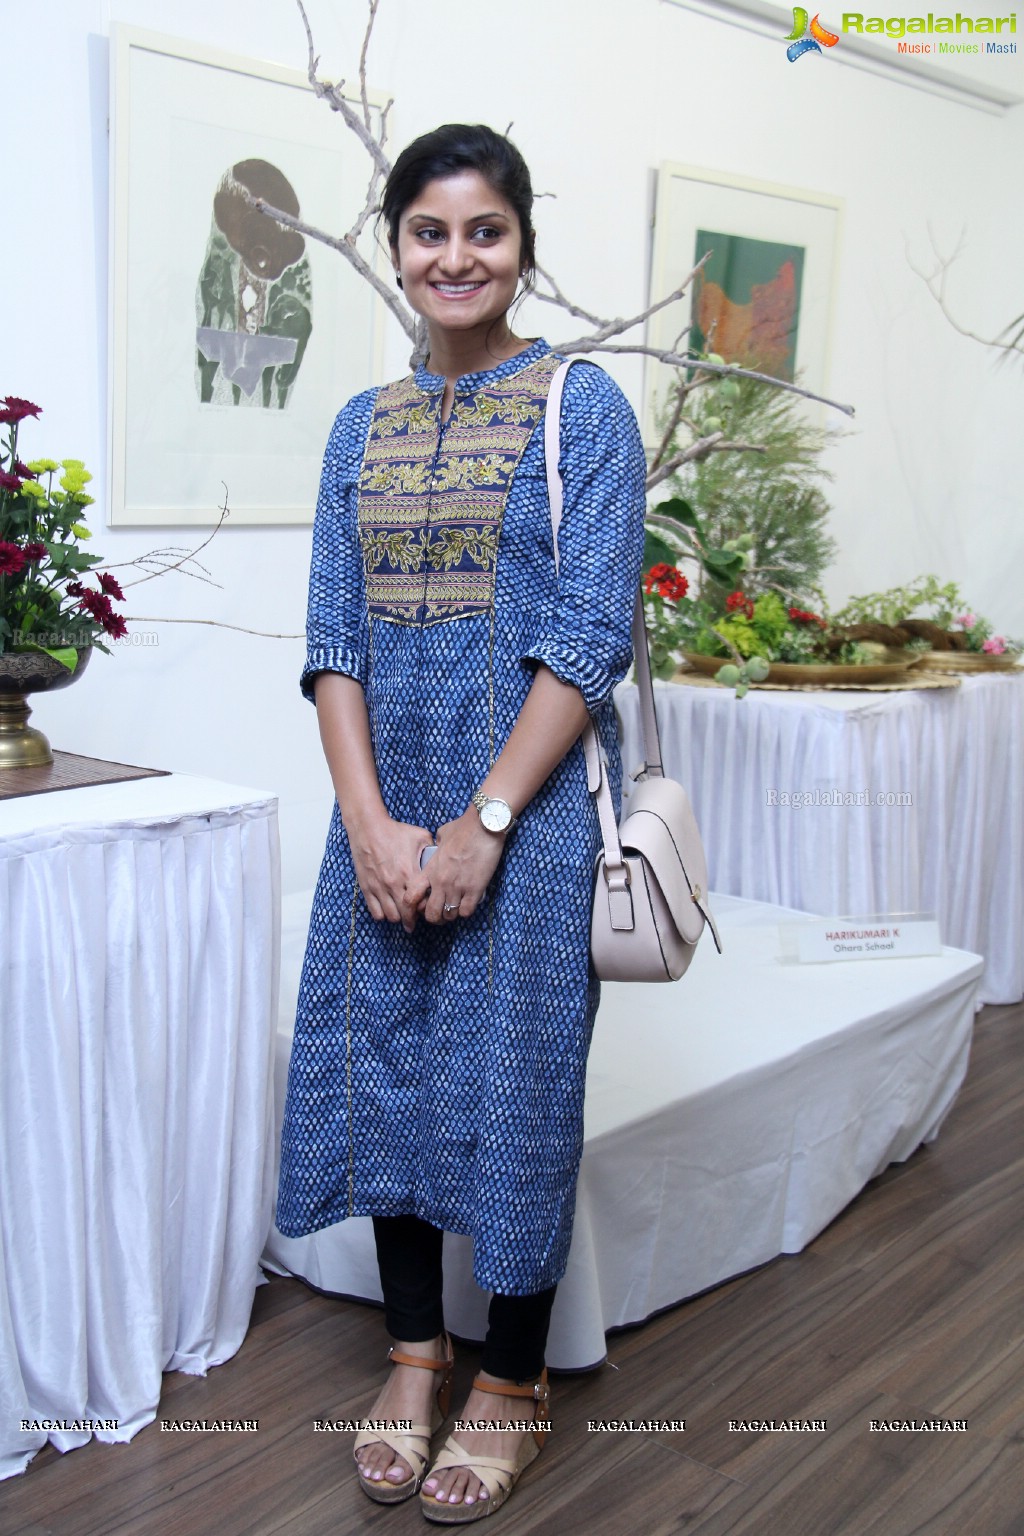 Ikebana Exhibition at DK Road, Hyderabad